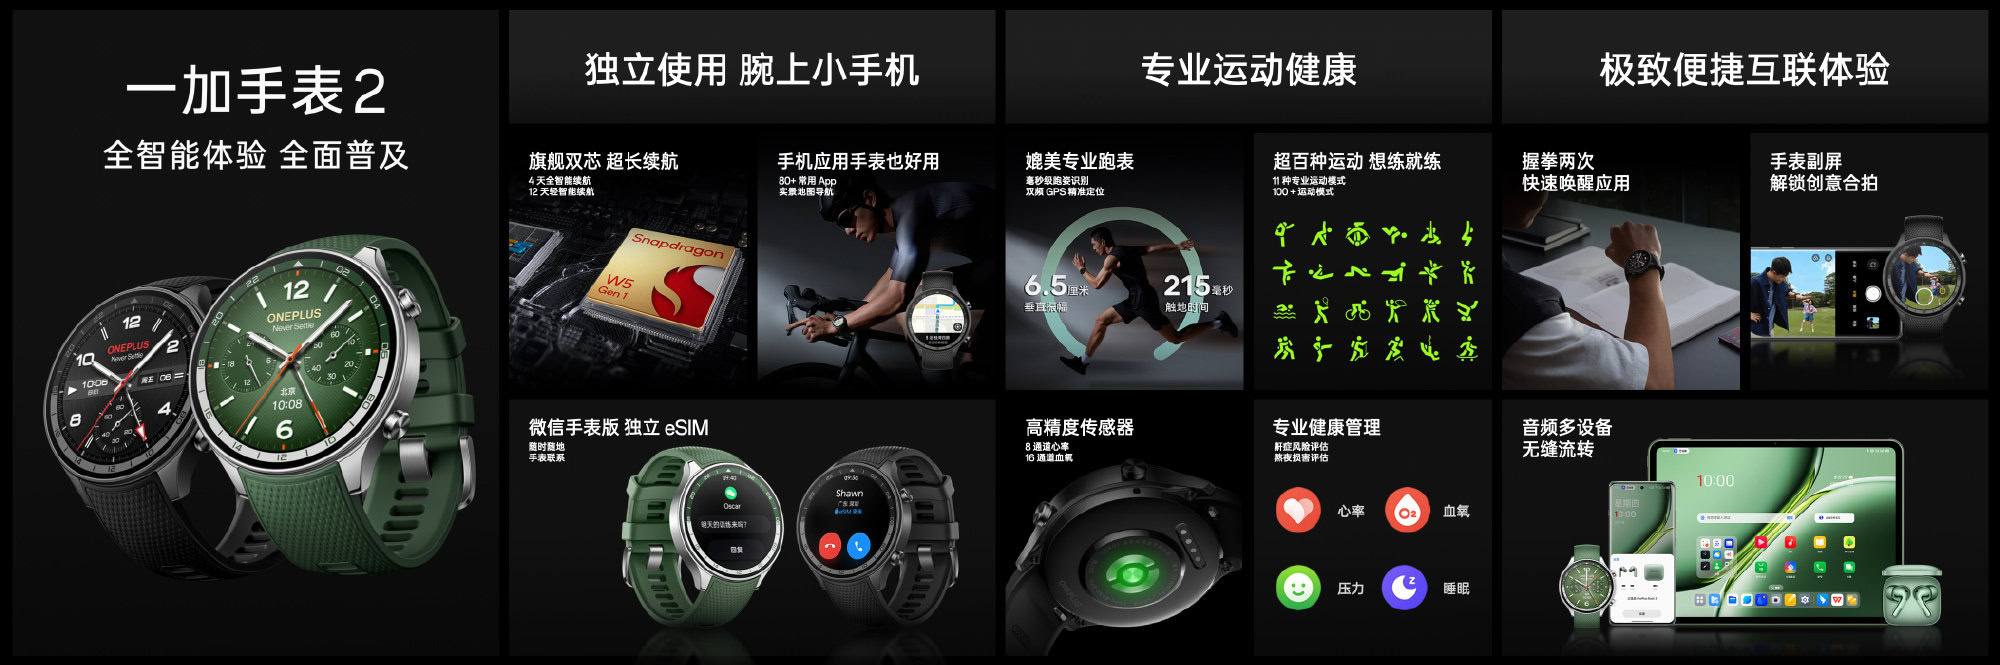 OnePlus watch 2r sheet